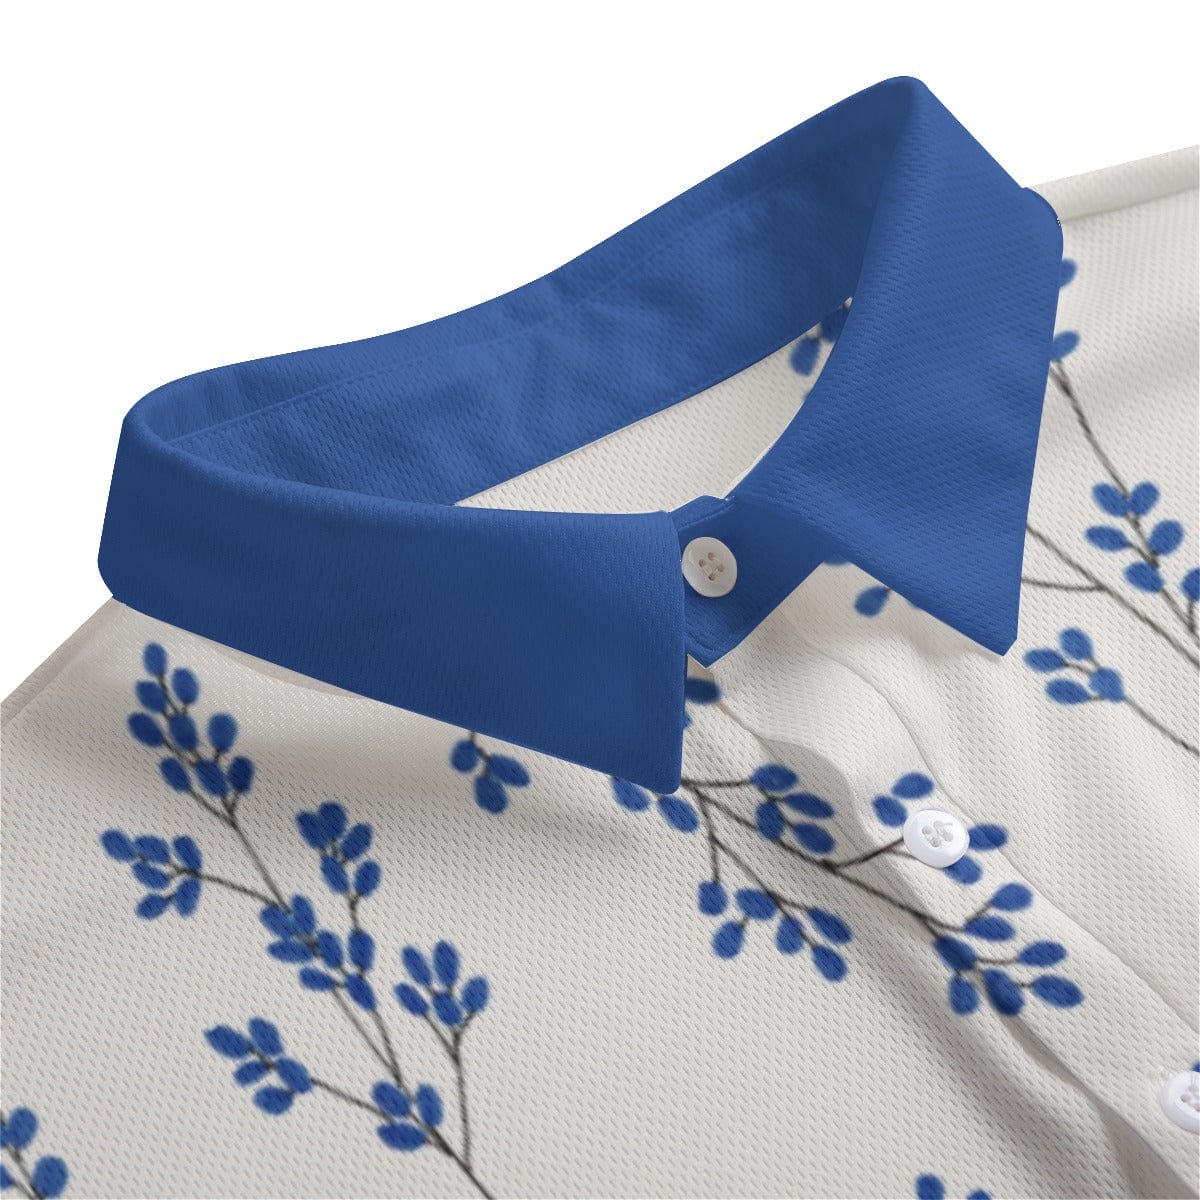 Yoycol 2XL / White All-Over Print Men's Polo Shirt | Birdseye